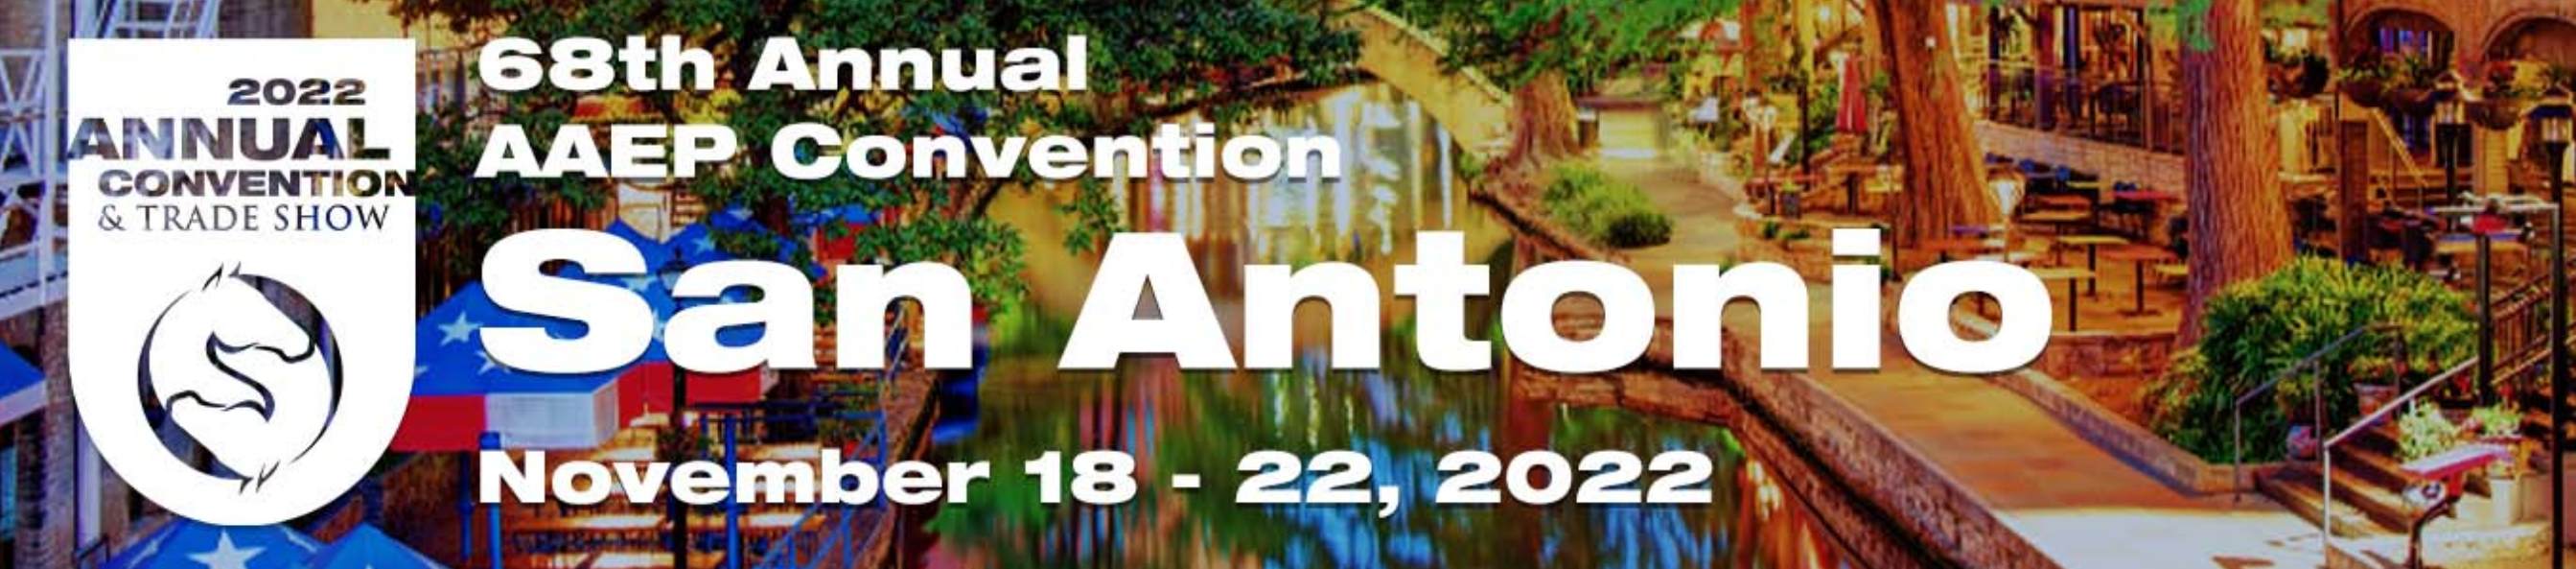 AAEP 68th Annual Convention